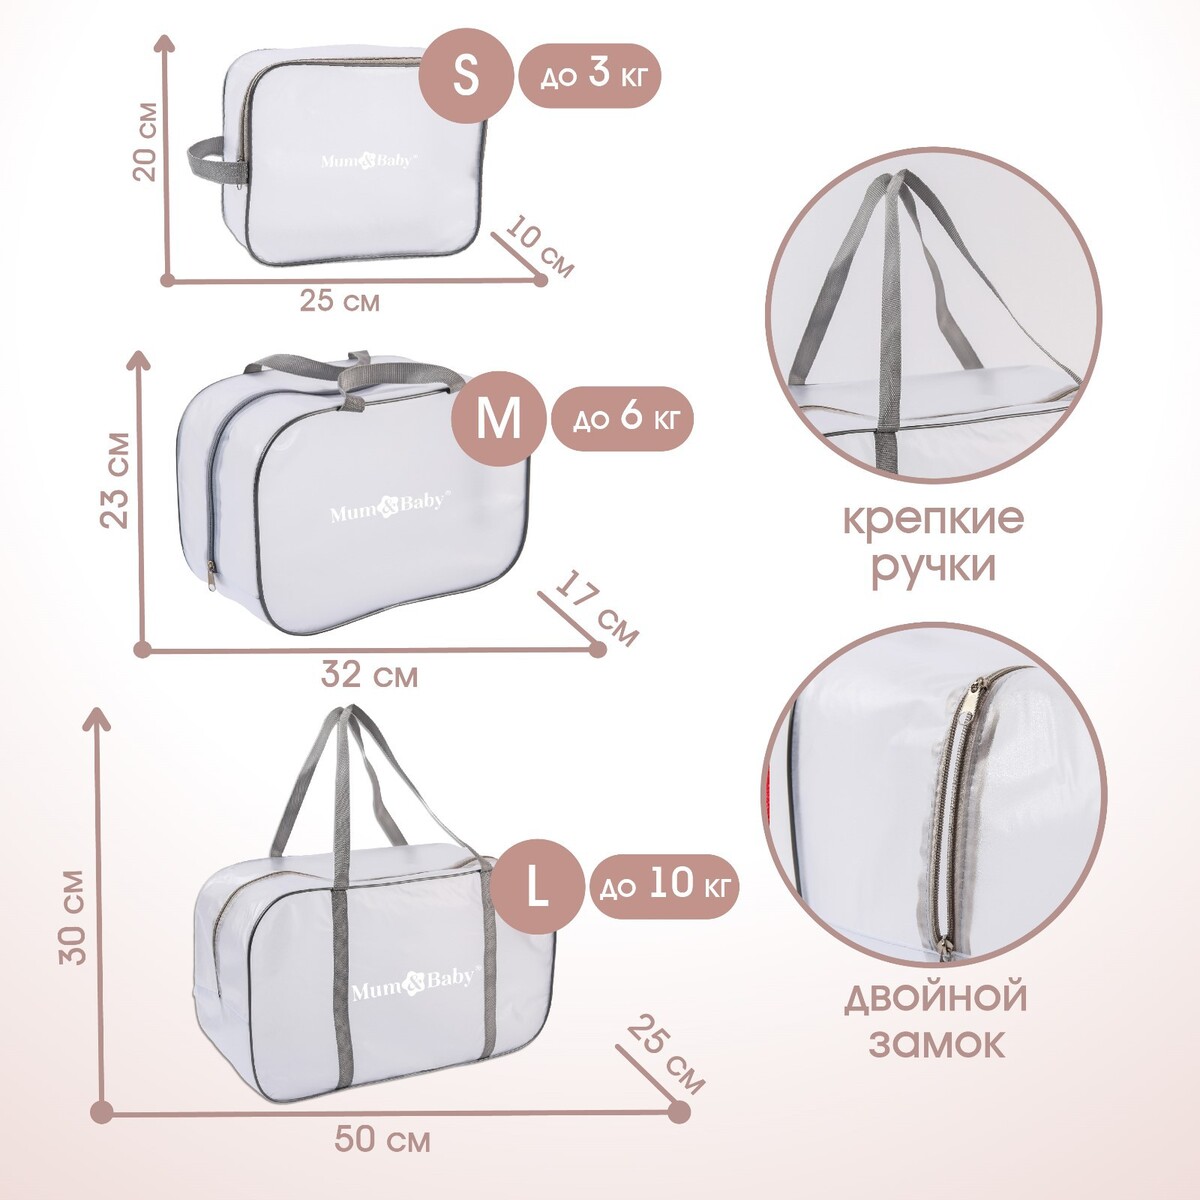 фото Набор сумок для роддома, комплект 3 в 1 №1, пвх mum&baby